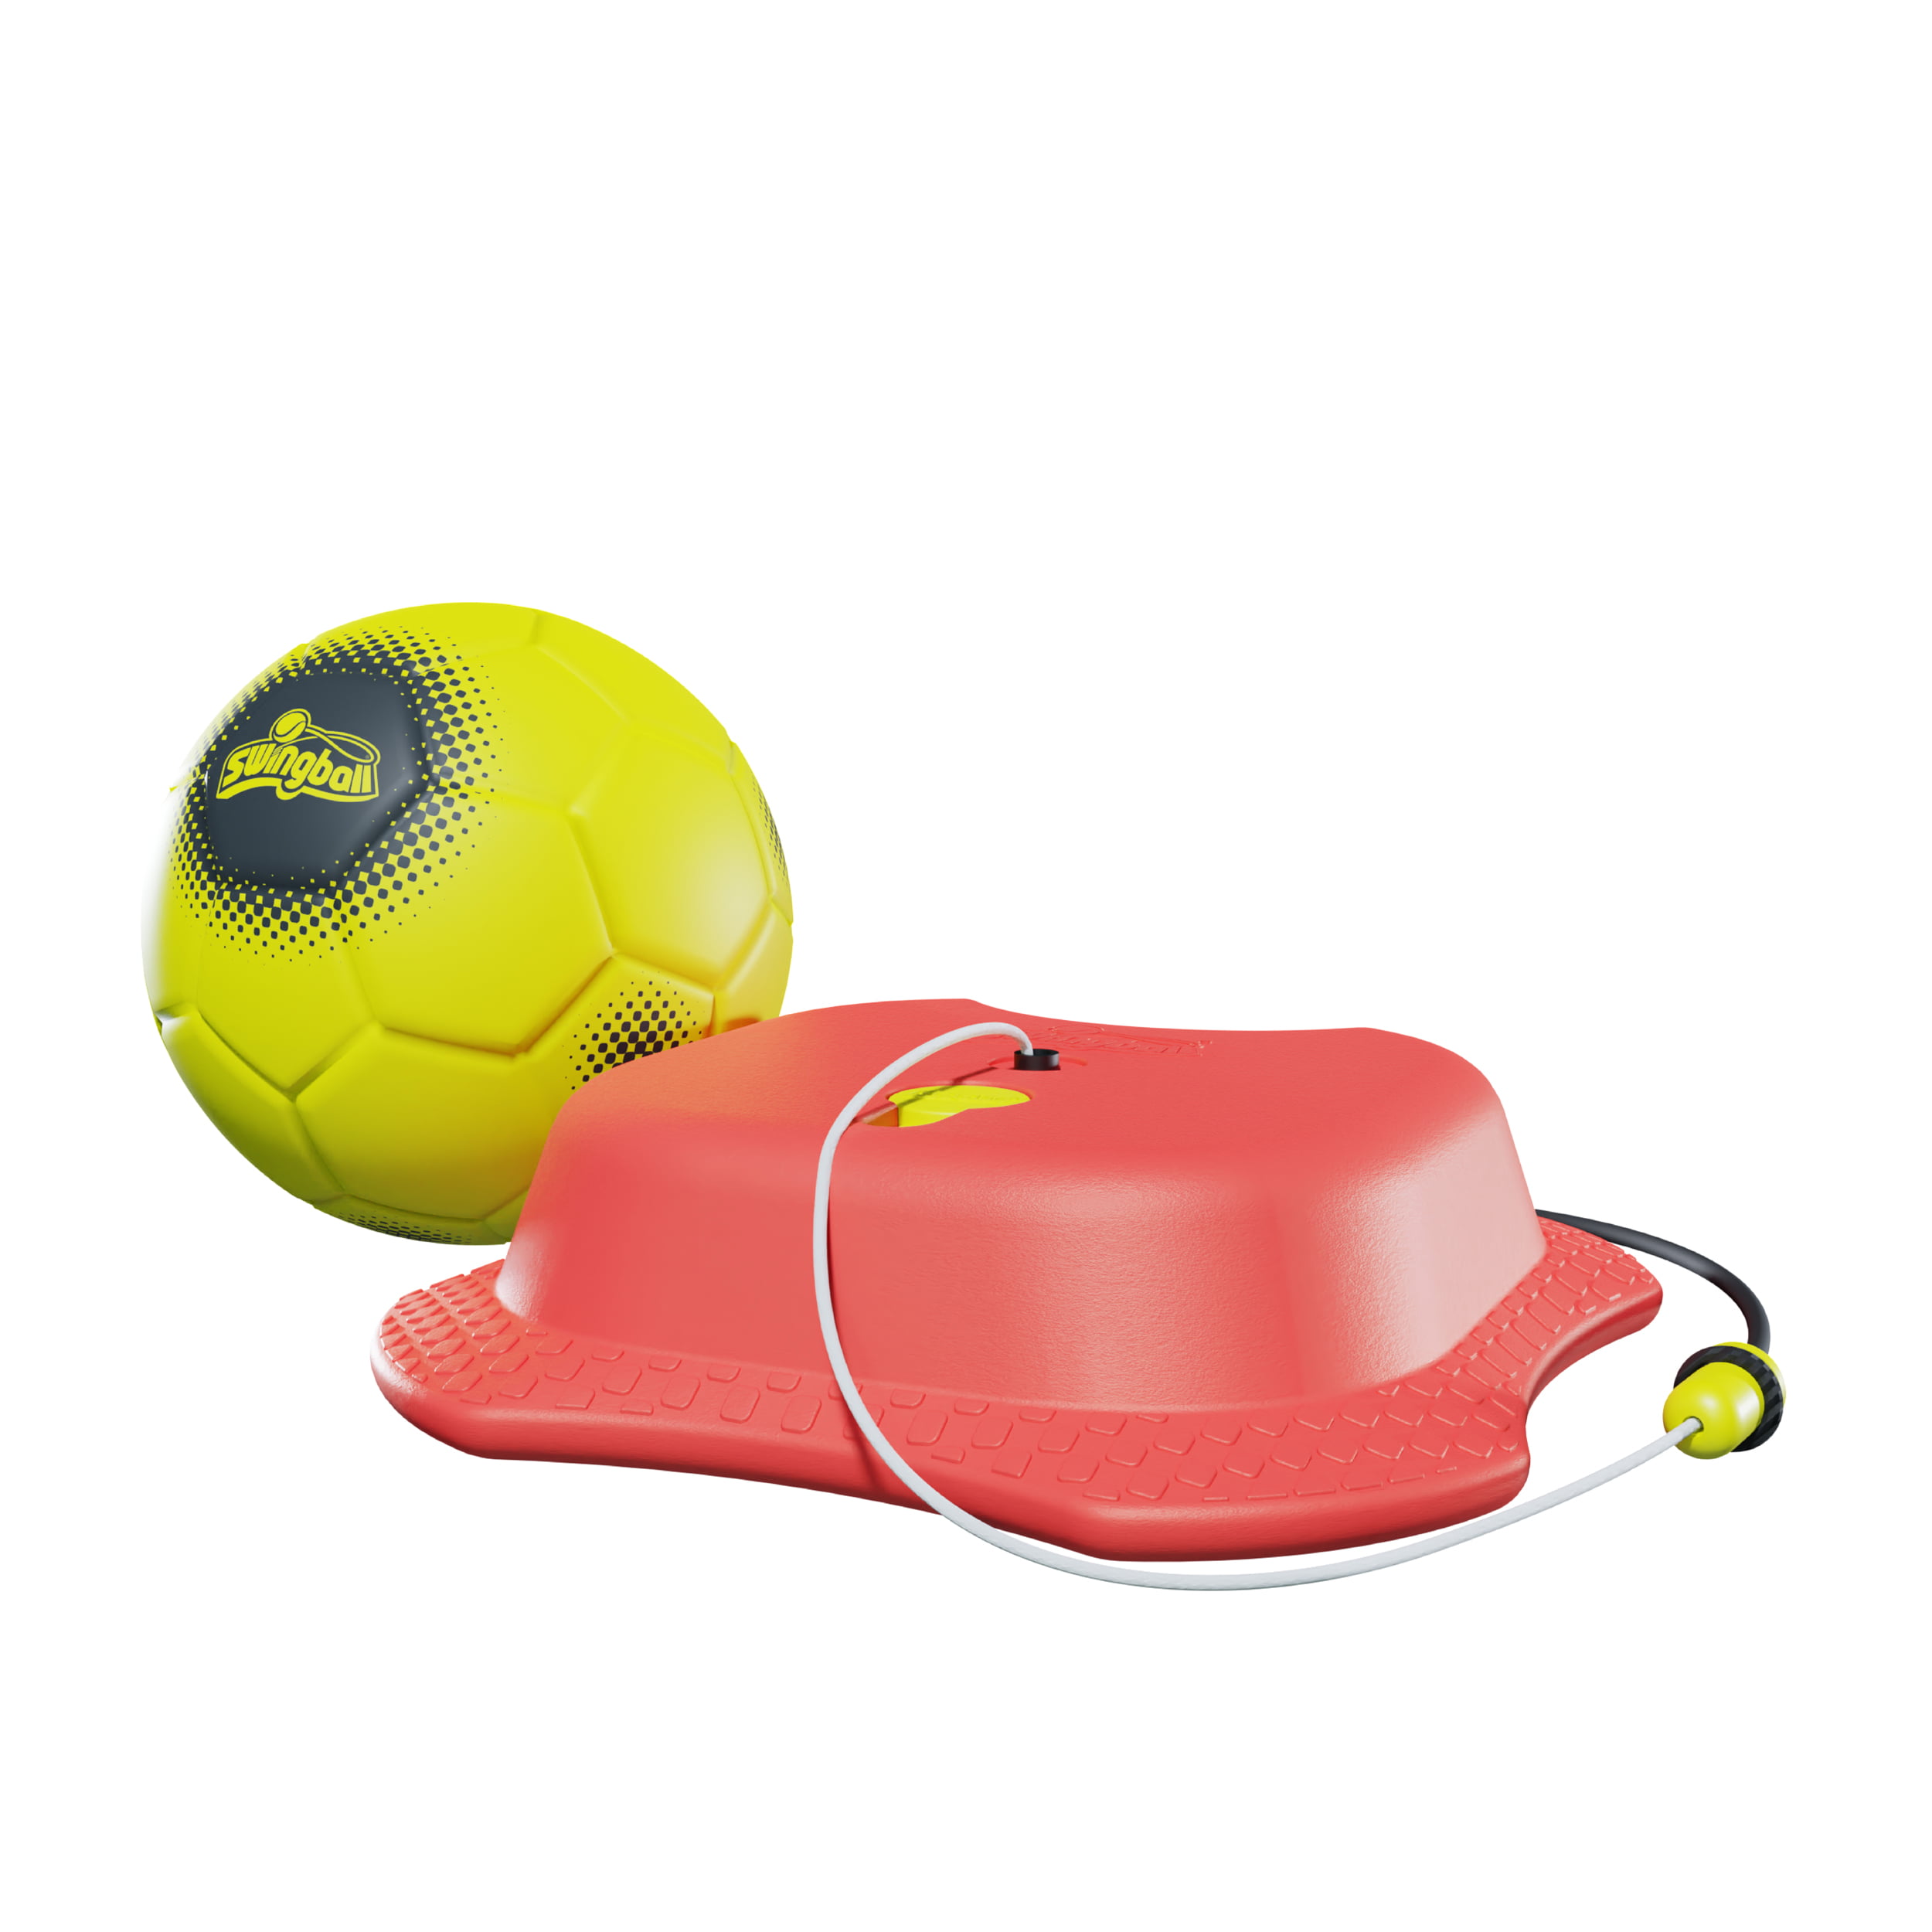 Mookie MK7212 Reflex Soccer Swingball, Red & Yellow